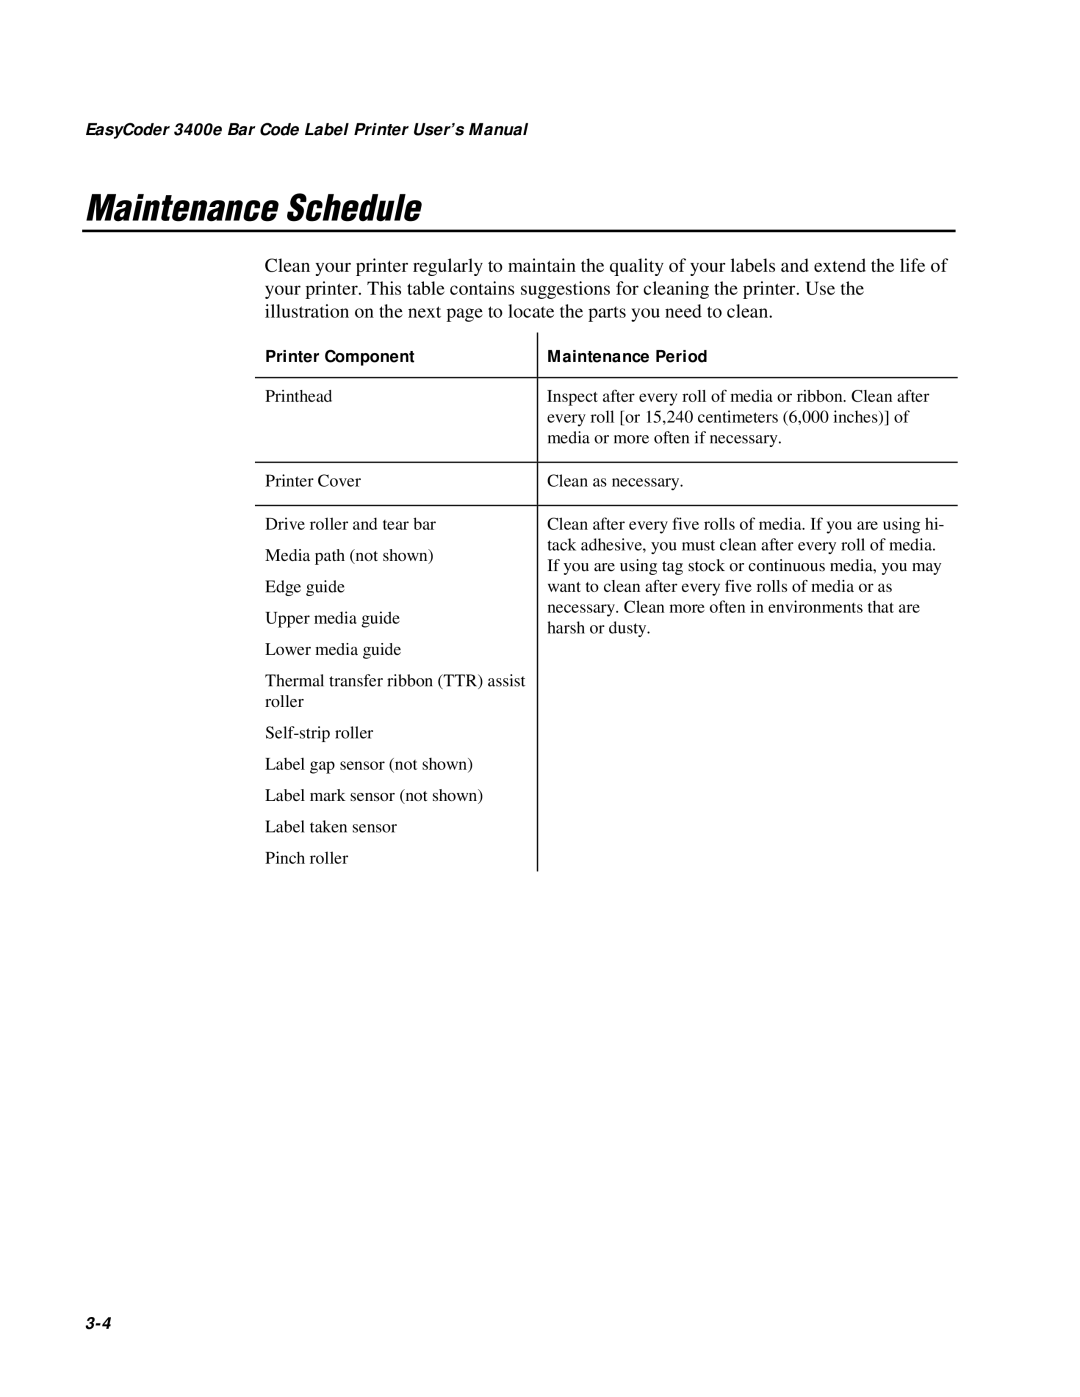 IBM Maintenance Schedule, EasyCoder 3400e Bar Code Label Printer User’s Manual, Printer Component, Maintenance Period 